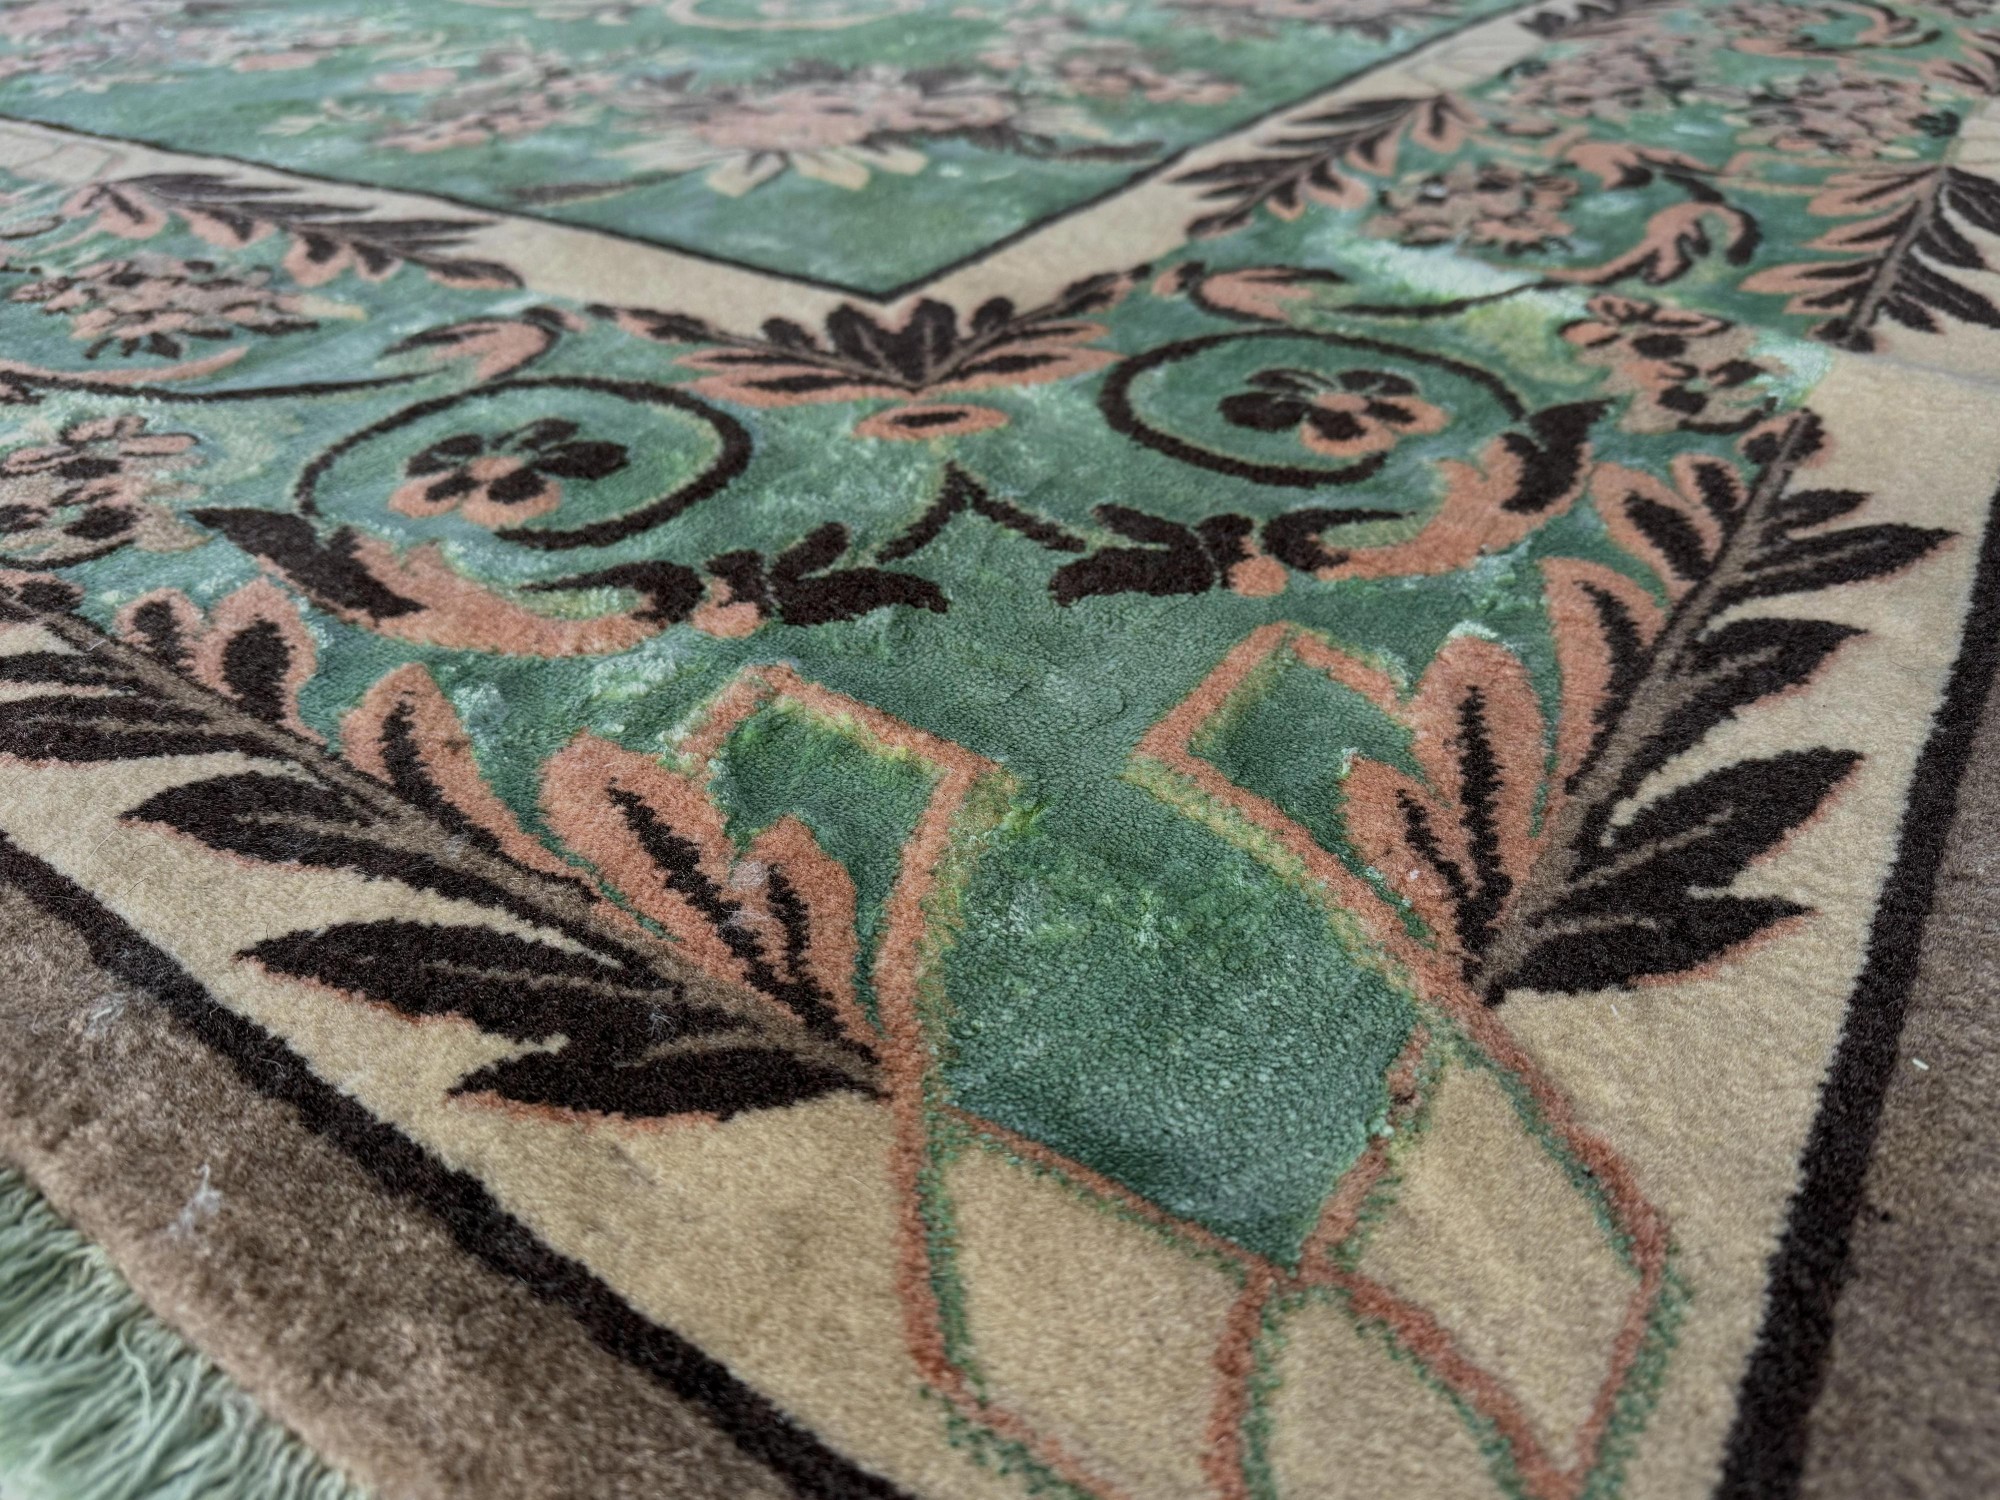 فرش پشمی ماشینی طبیعی و ارگانیک کد 0070 - زمینه سبز پر رنگ - حاشیه سبز پر رنگ